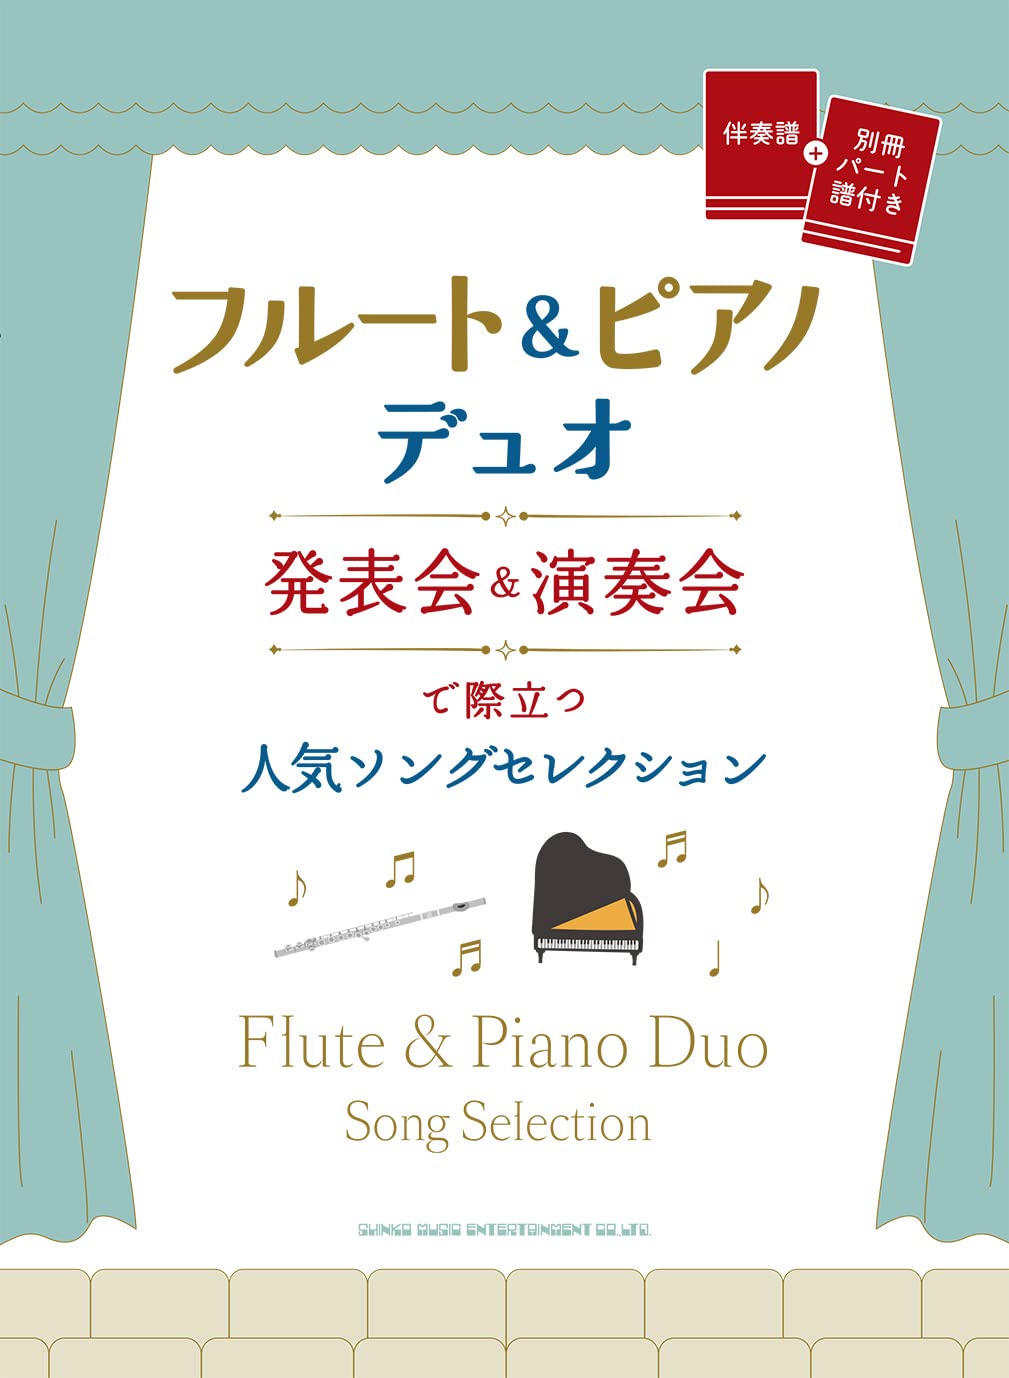 Popular Songs Selection for a flute recital Flute&Piano(Upper-Intermediate)